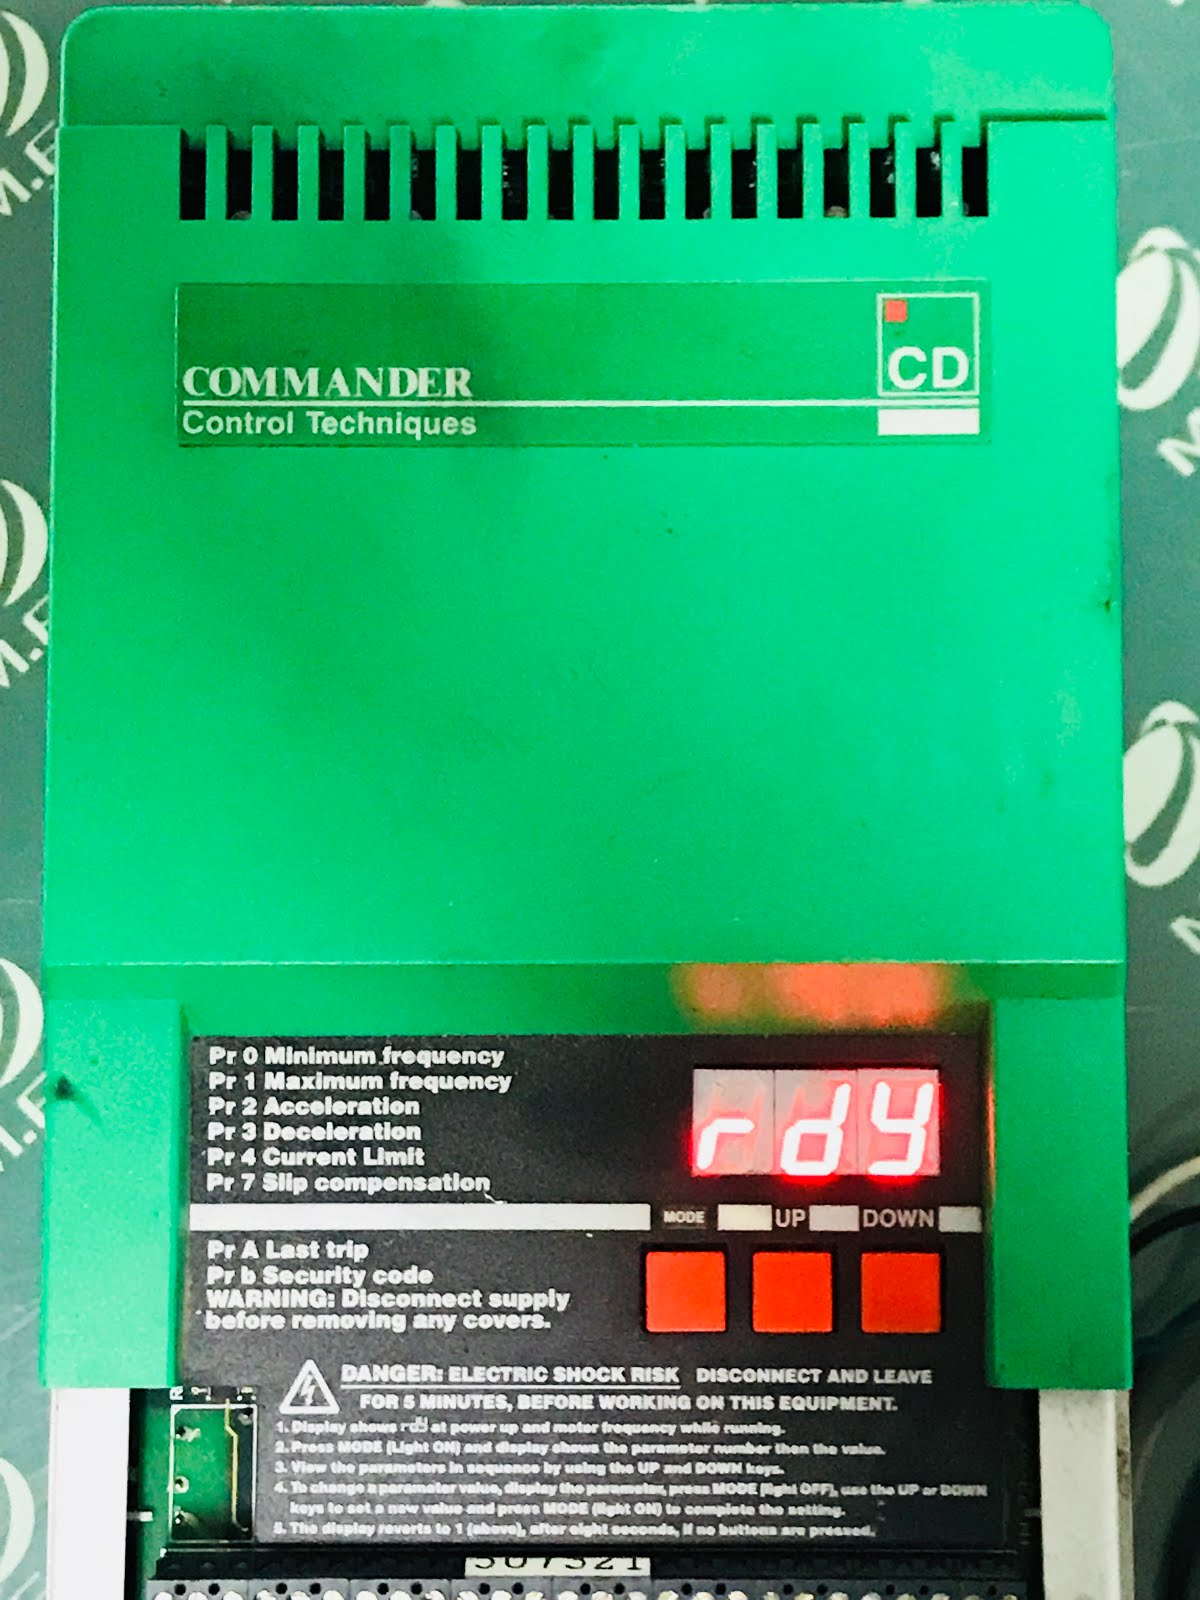 Control techniques. Серводвигатель Control techniques. Cd75-750 Commander CD схема. Commander CDS Inverter Drives manual. Commander Control techniques VC 150.